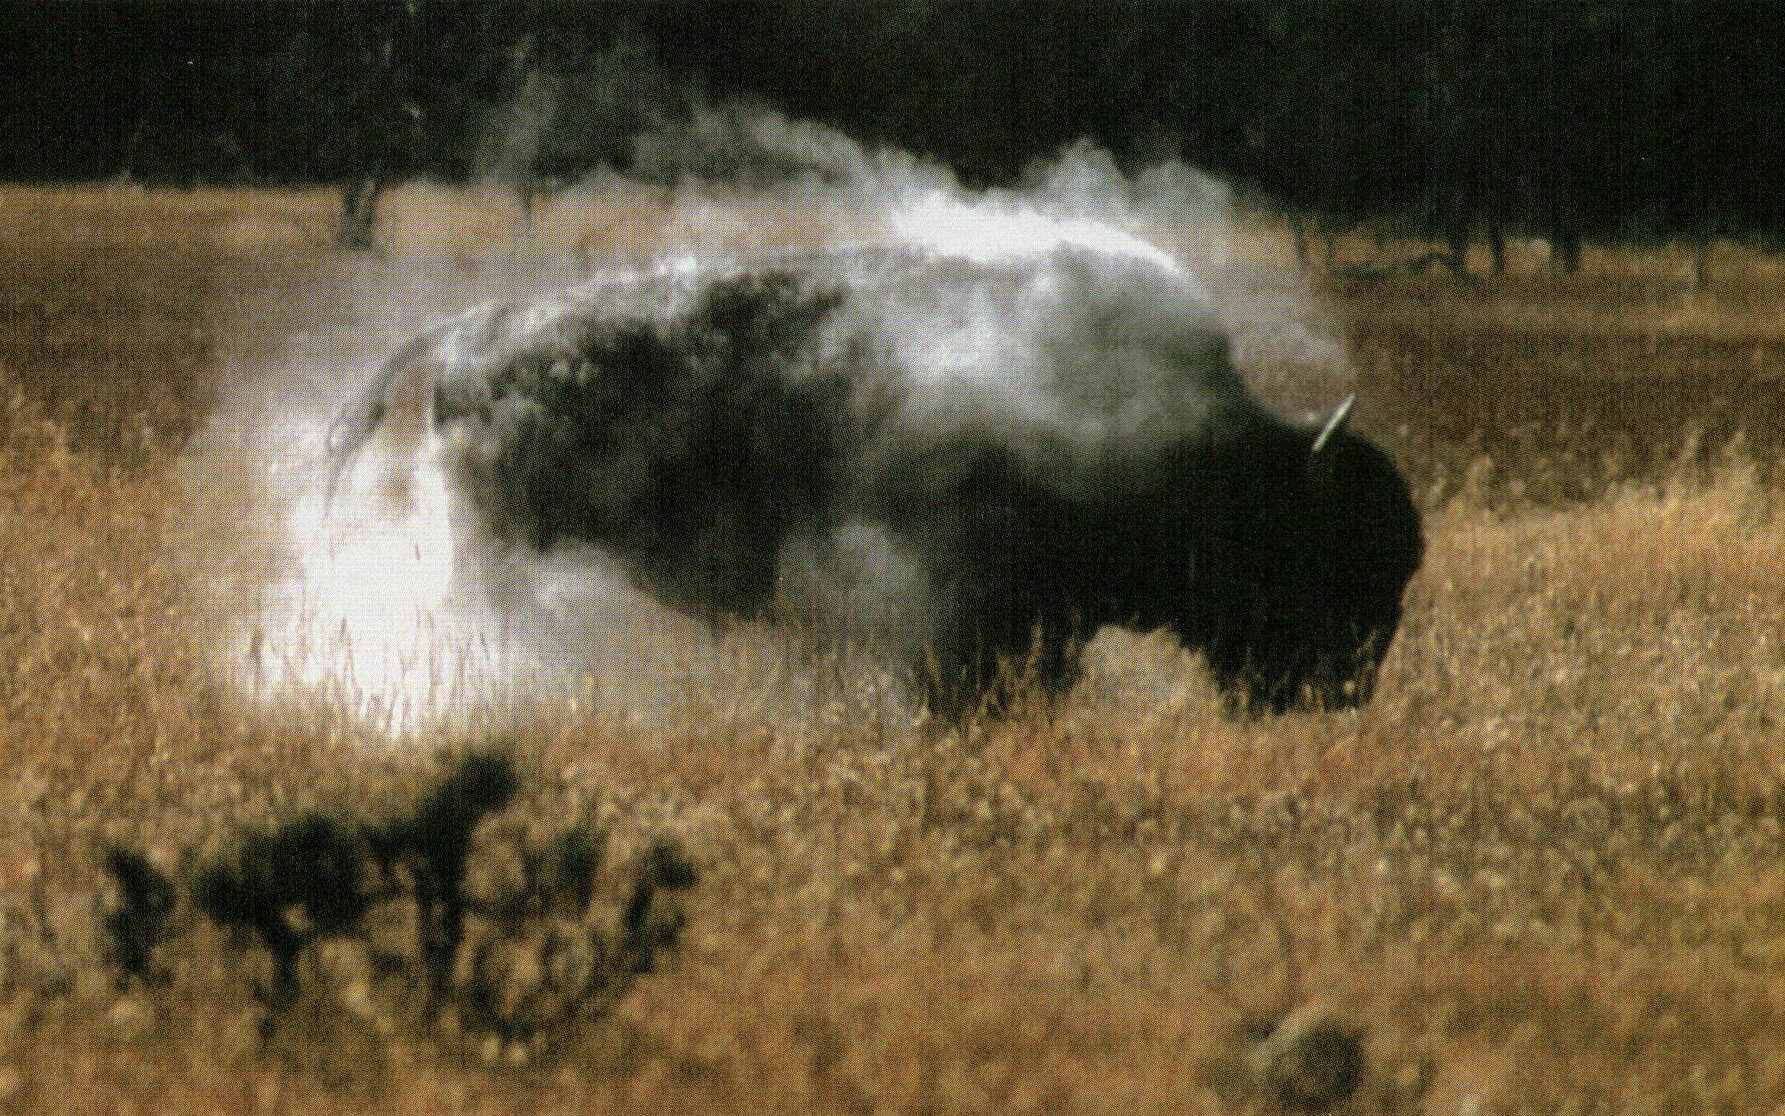 North American Bison